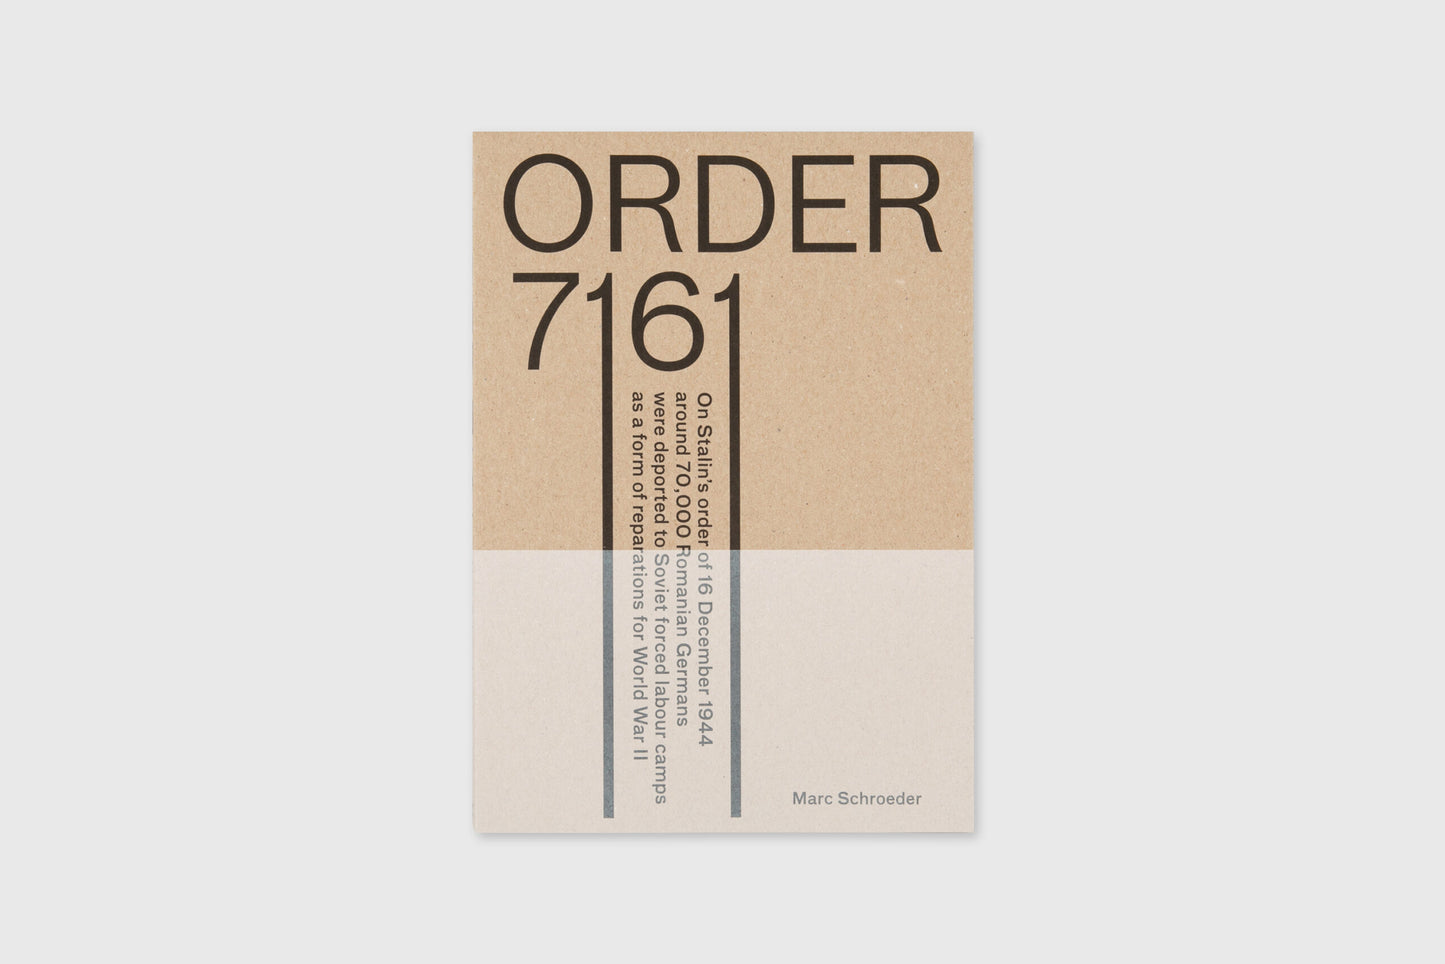 Order 7161